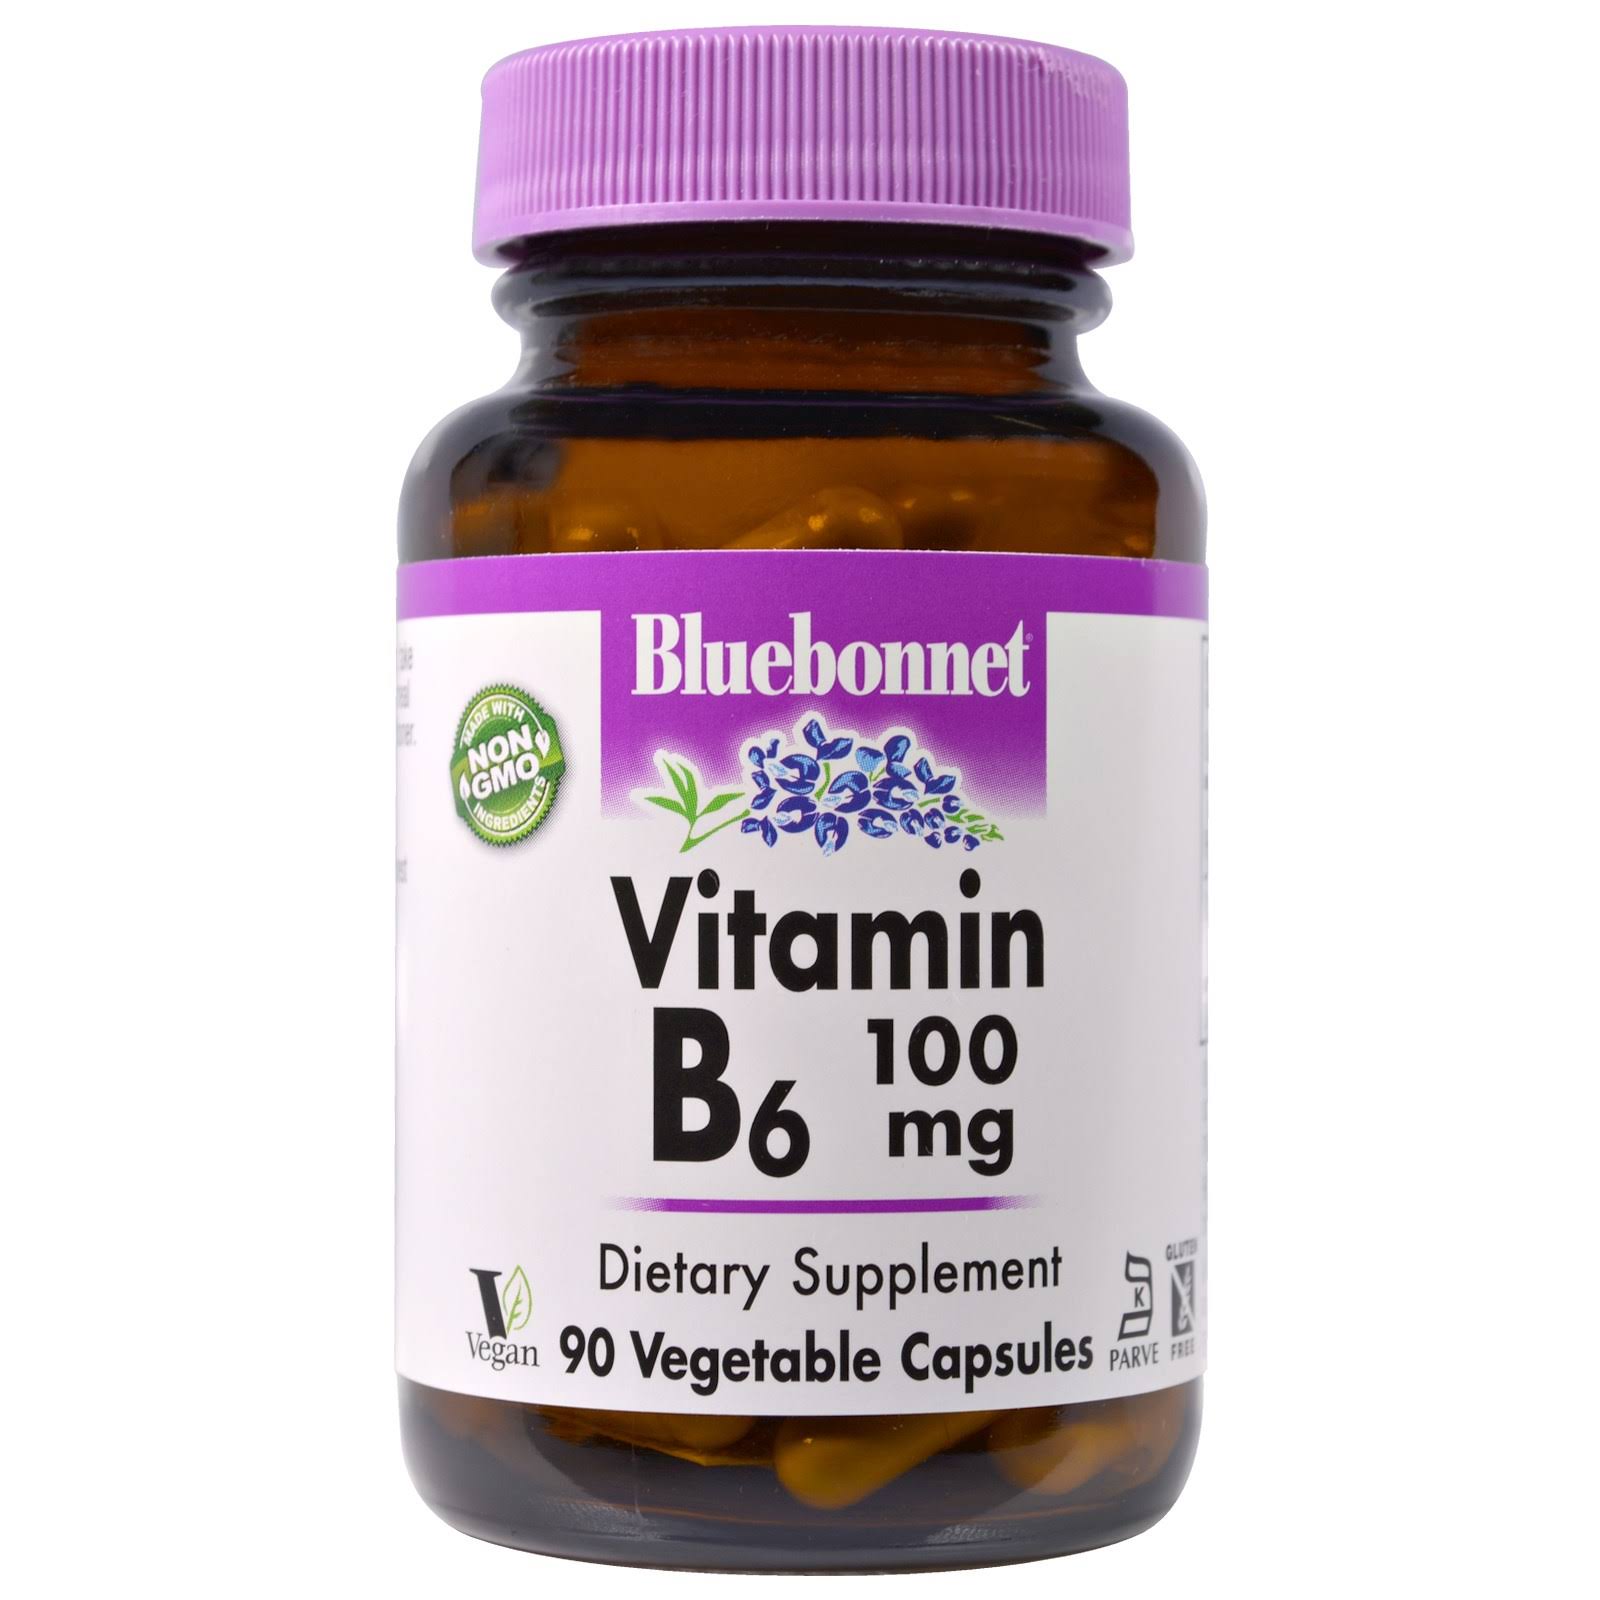 Bluebonnet Nutrition Vitamin B6 Capsule - 100g, 90 Capsules